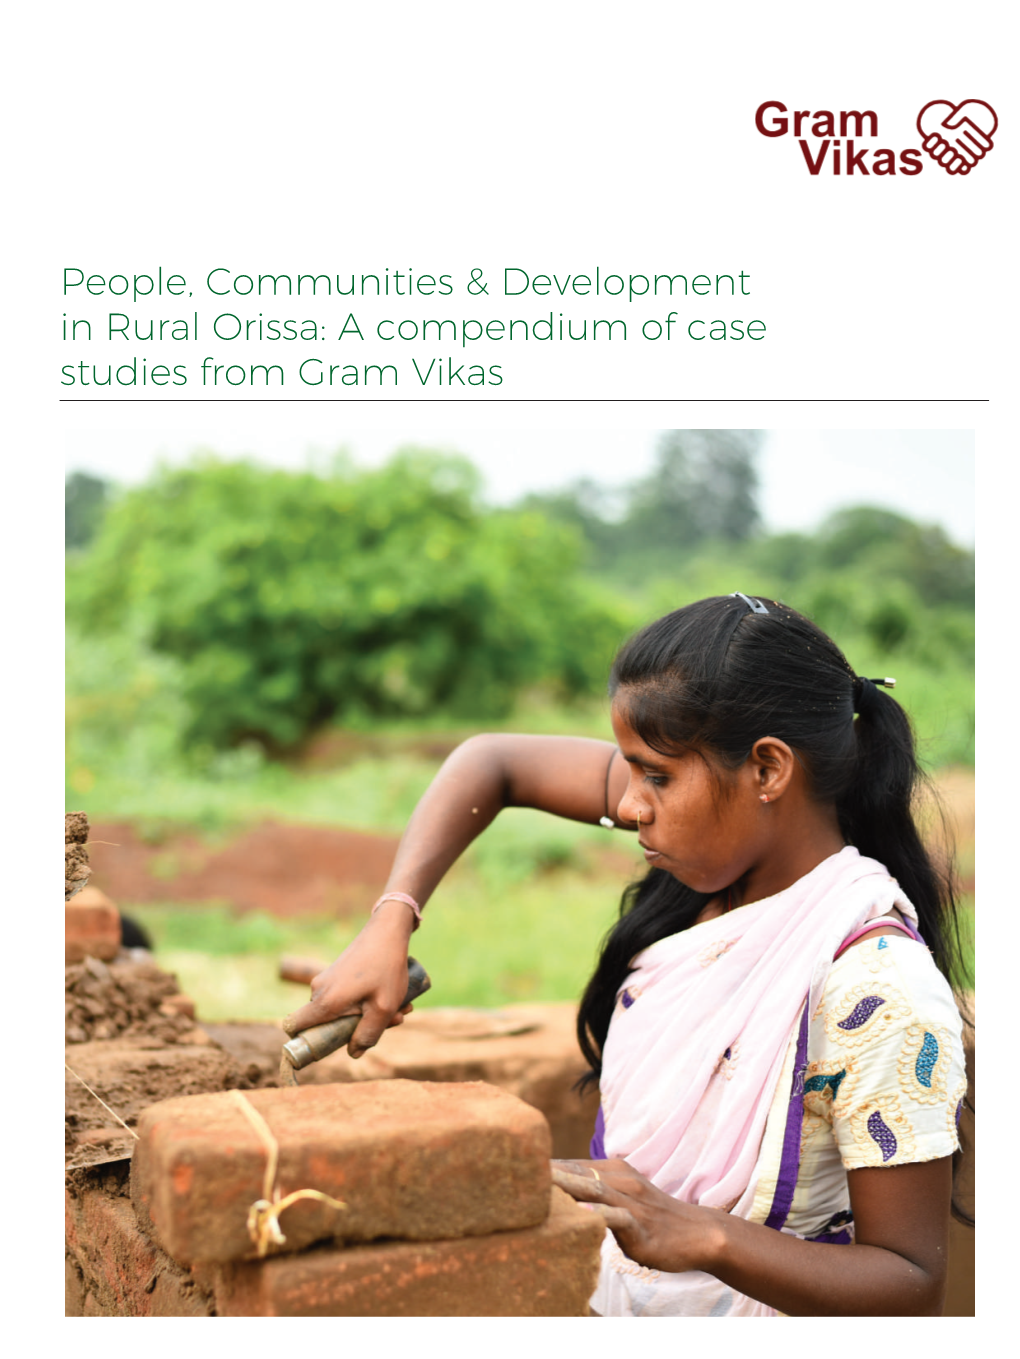 People, Communities & Development in Rural Orissa